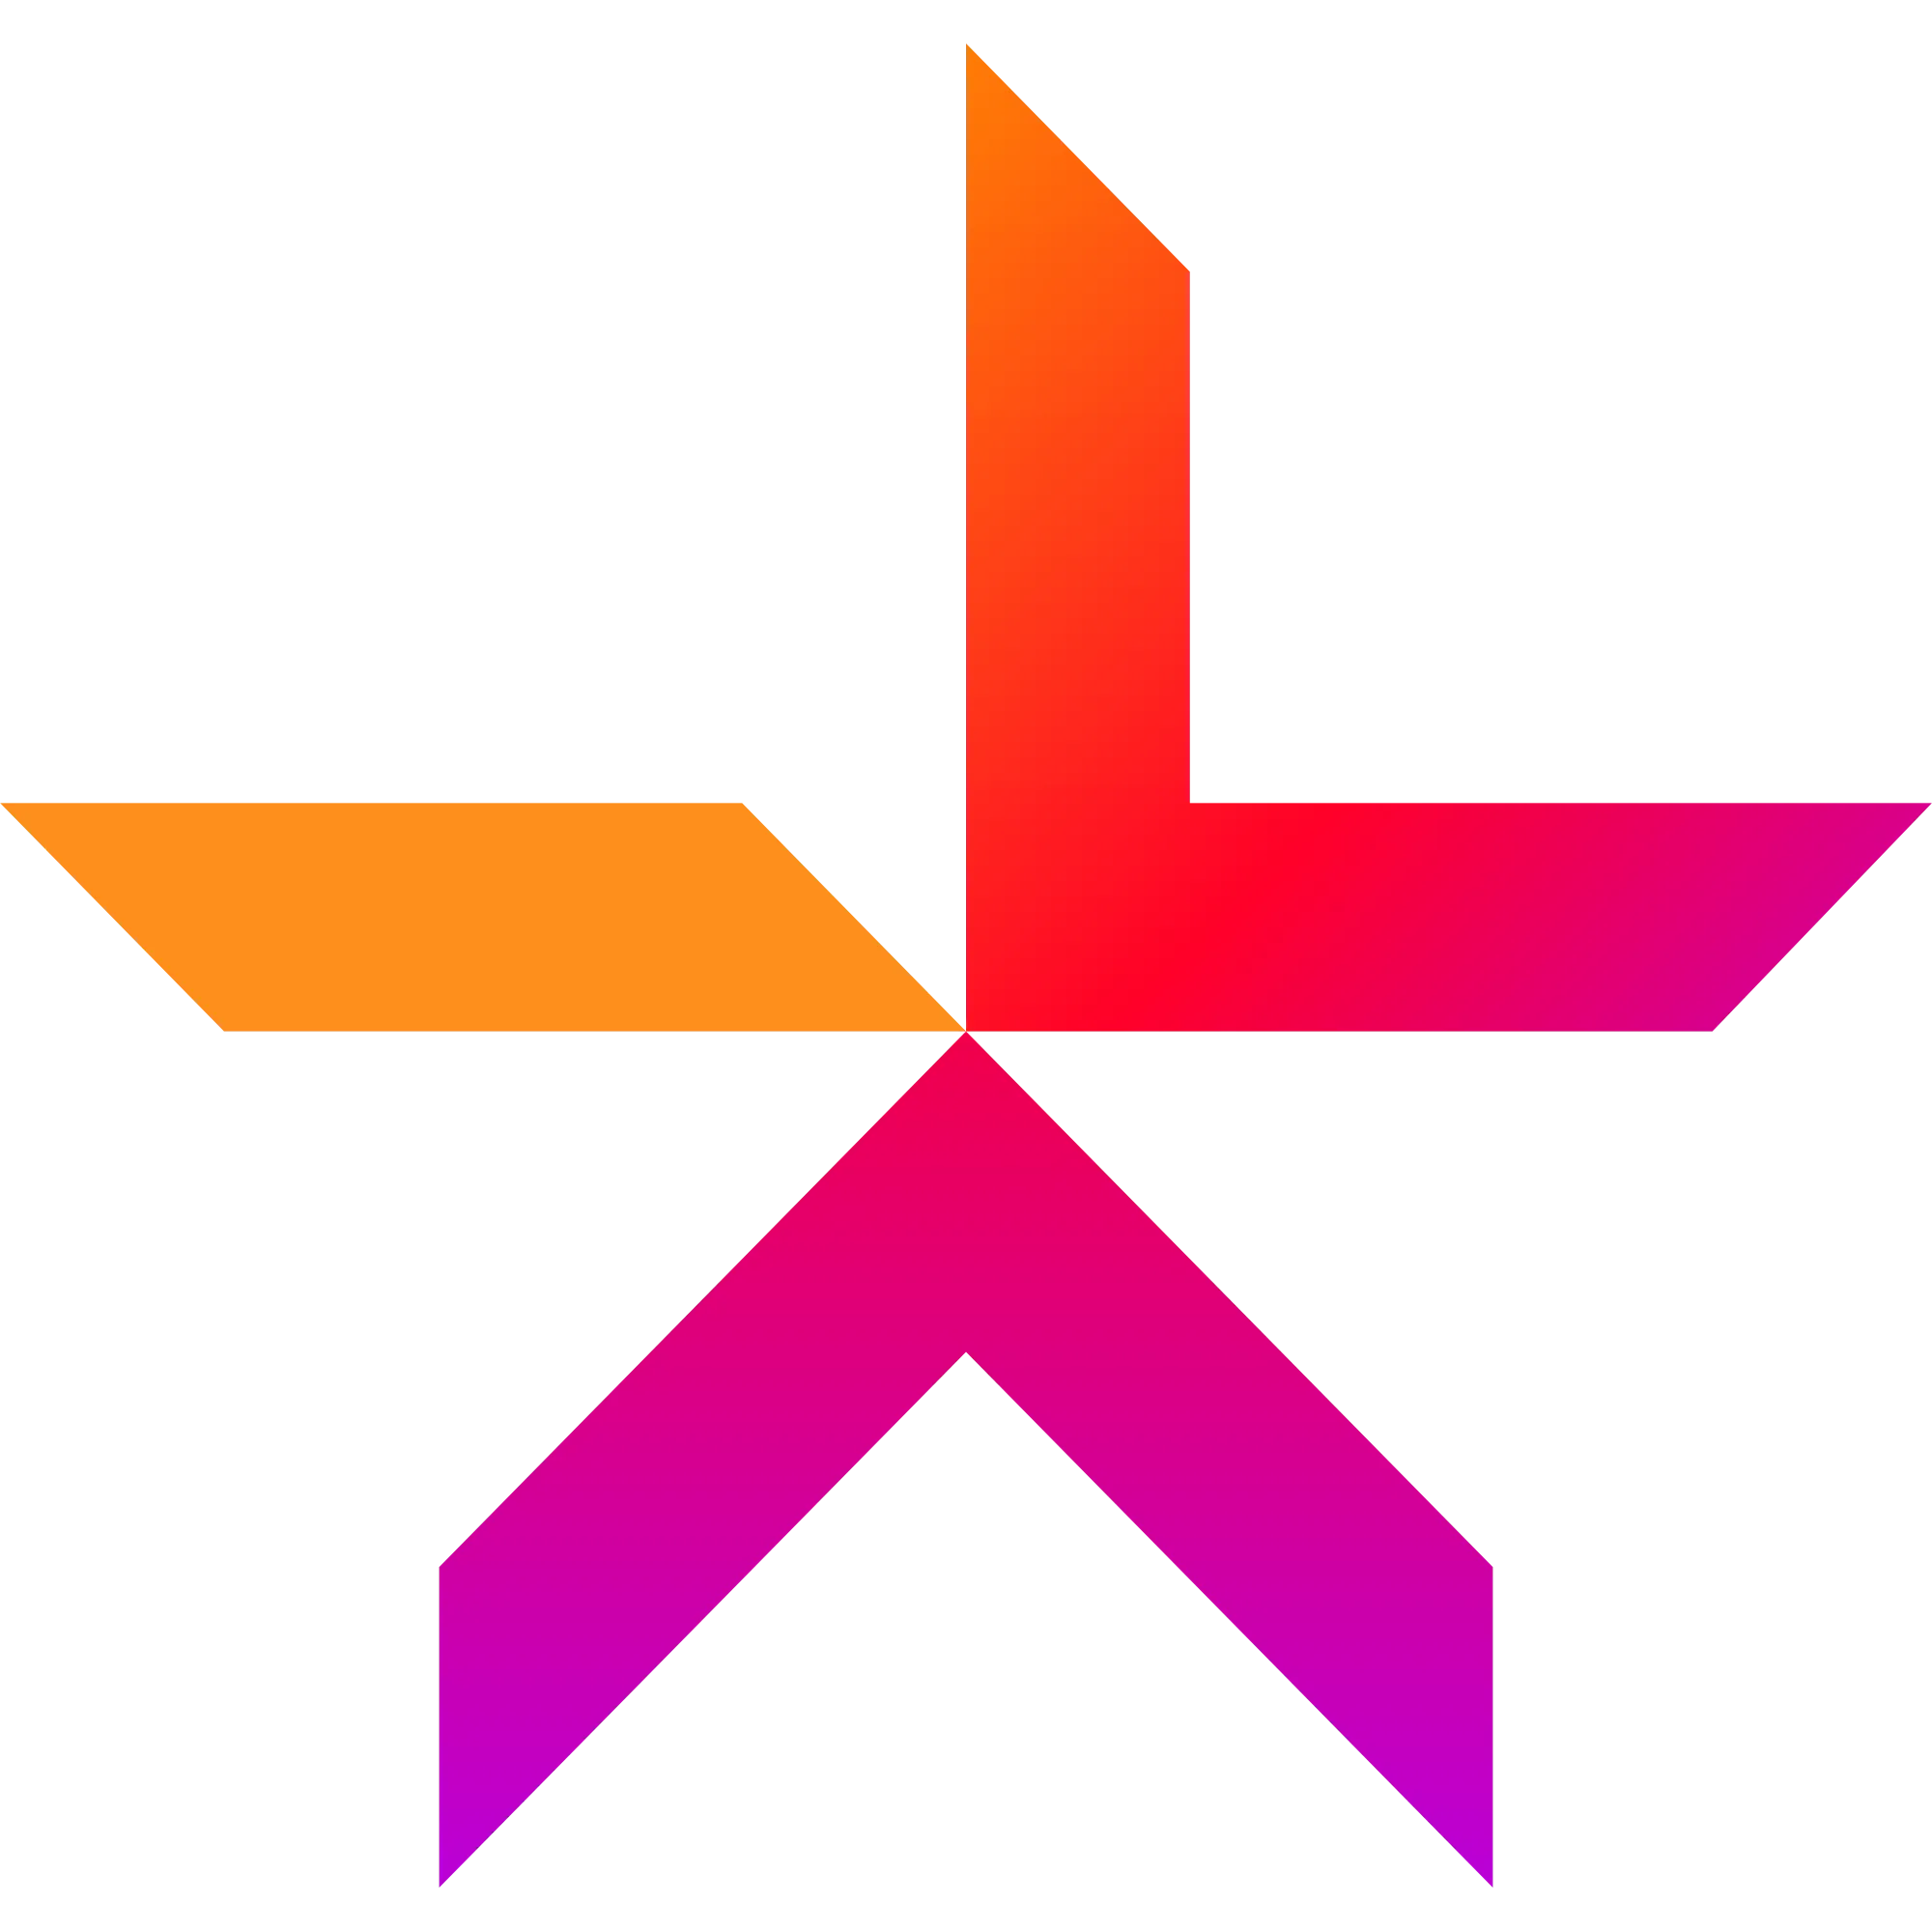 Lykke logo in png format